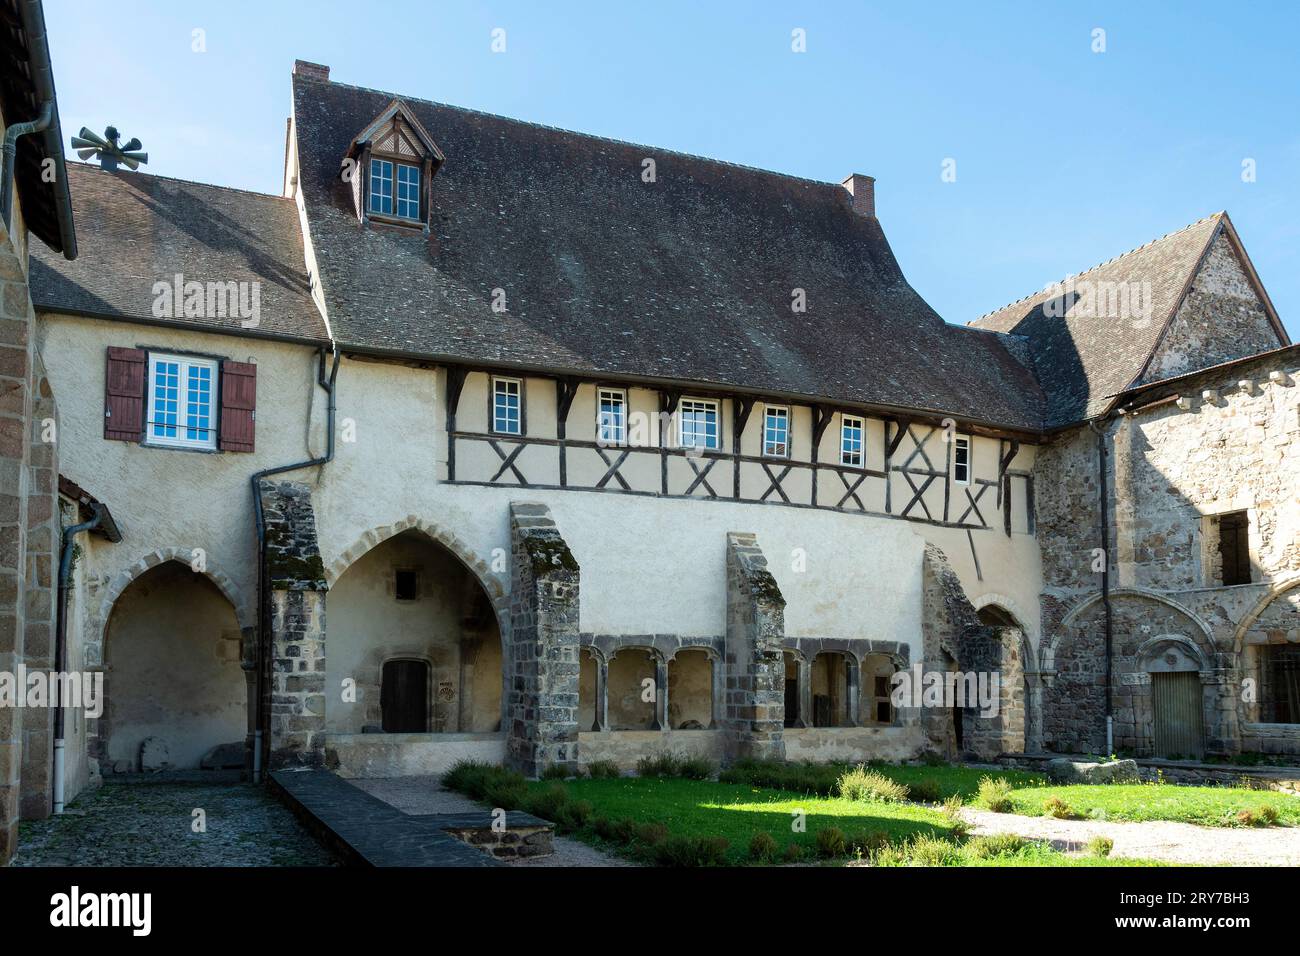 Combrailles region. Menat village, cloister of the benedictine abbey (12th century),Puy de Dome department, Auvergne-Rhone-Alpes, France Stock Photo